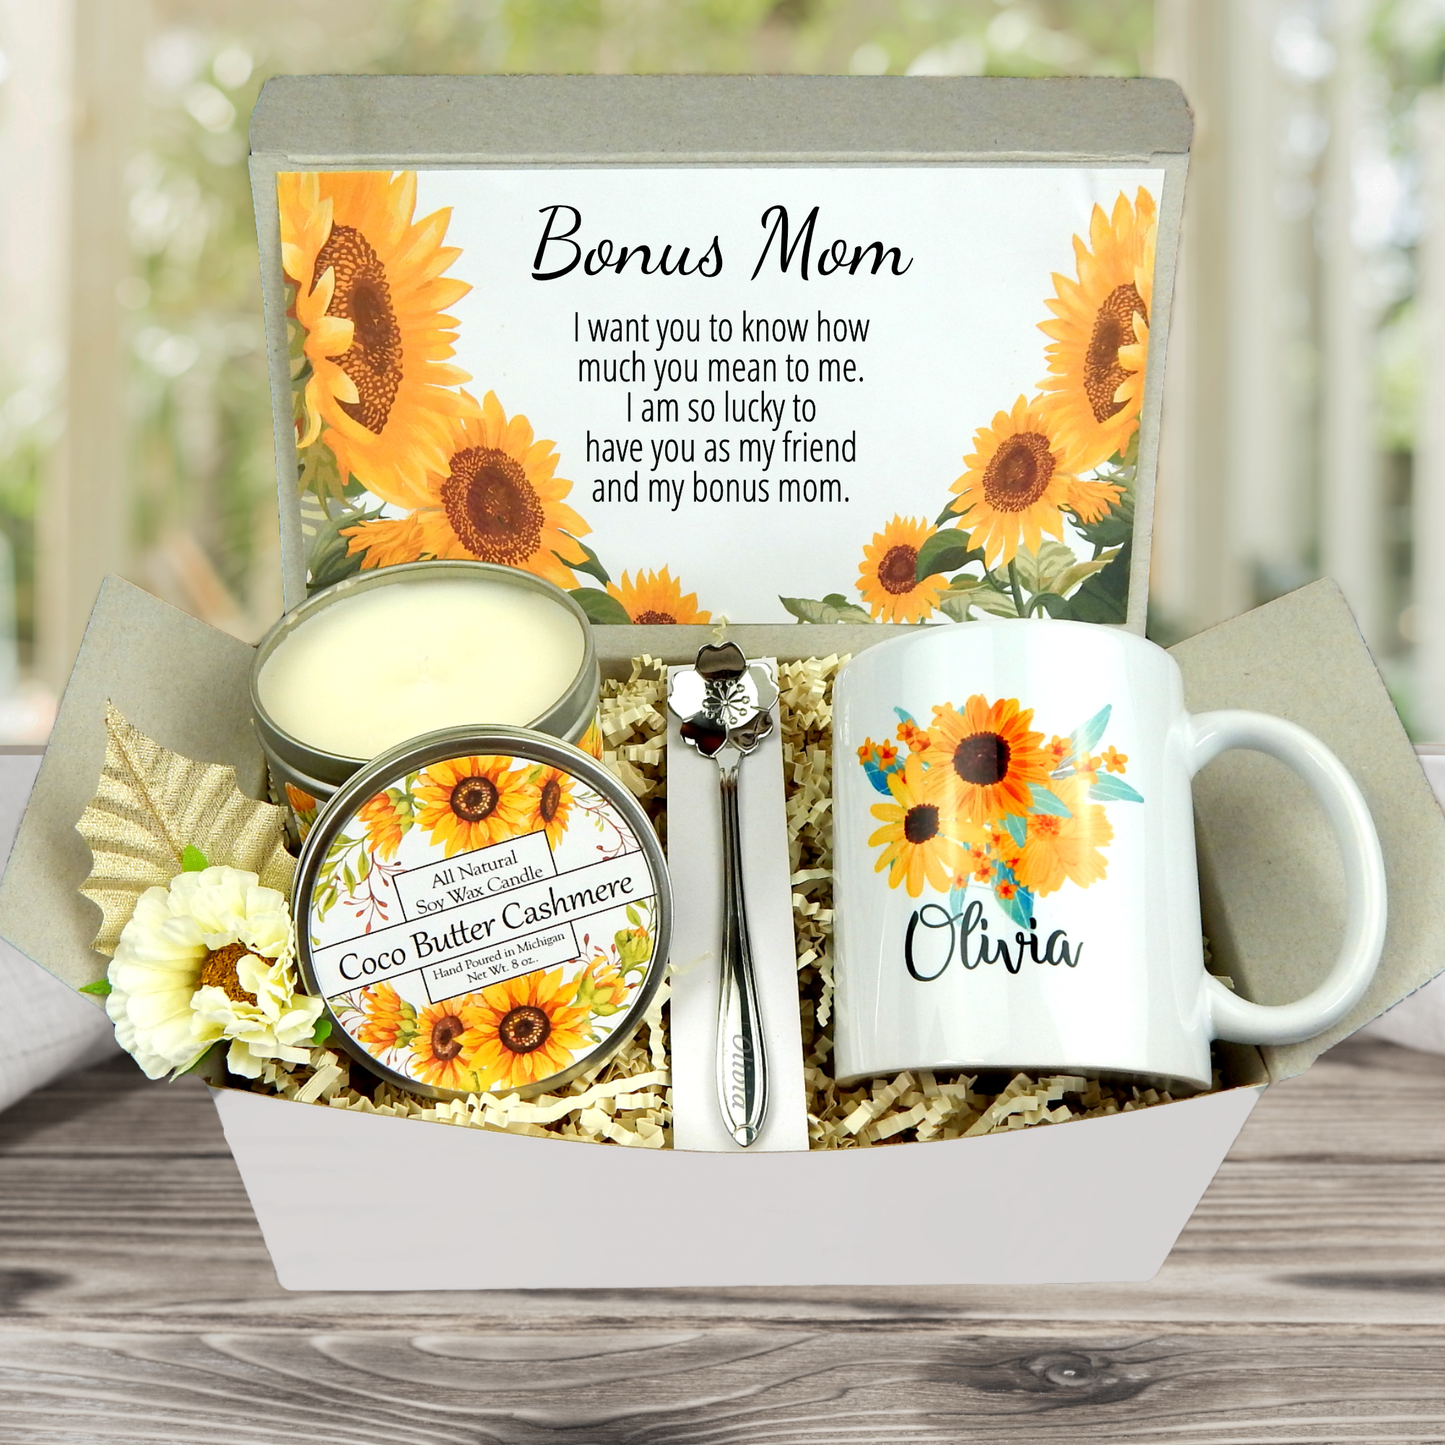 Step-Mom Gift Basket for Bonus Mom with Custom Mug